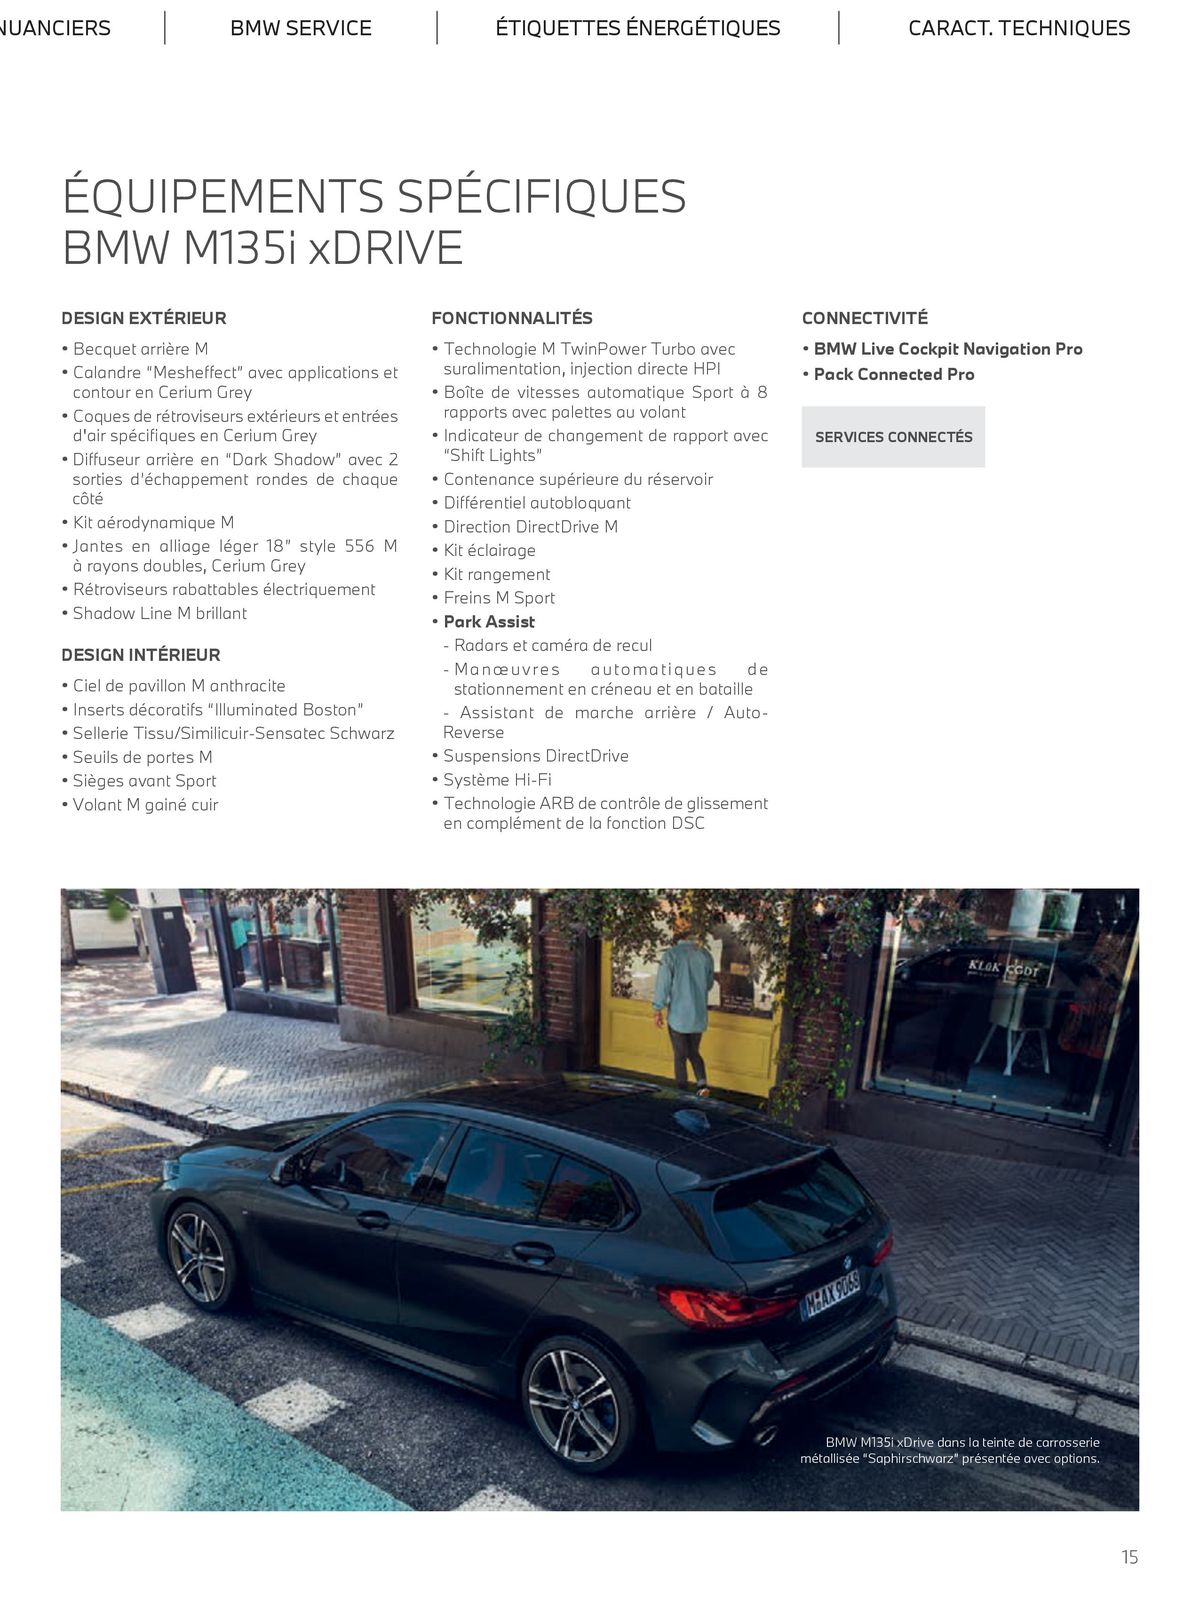 Catalogue THE BMW SÉRIE 1, page 00015